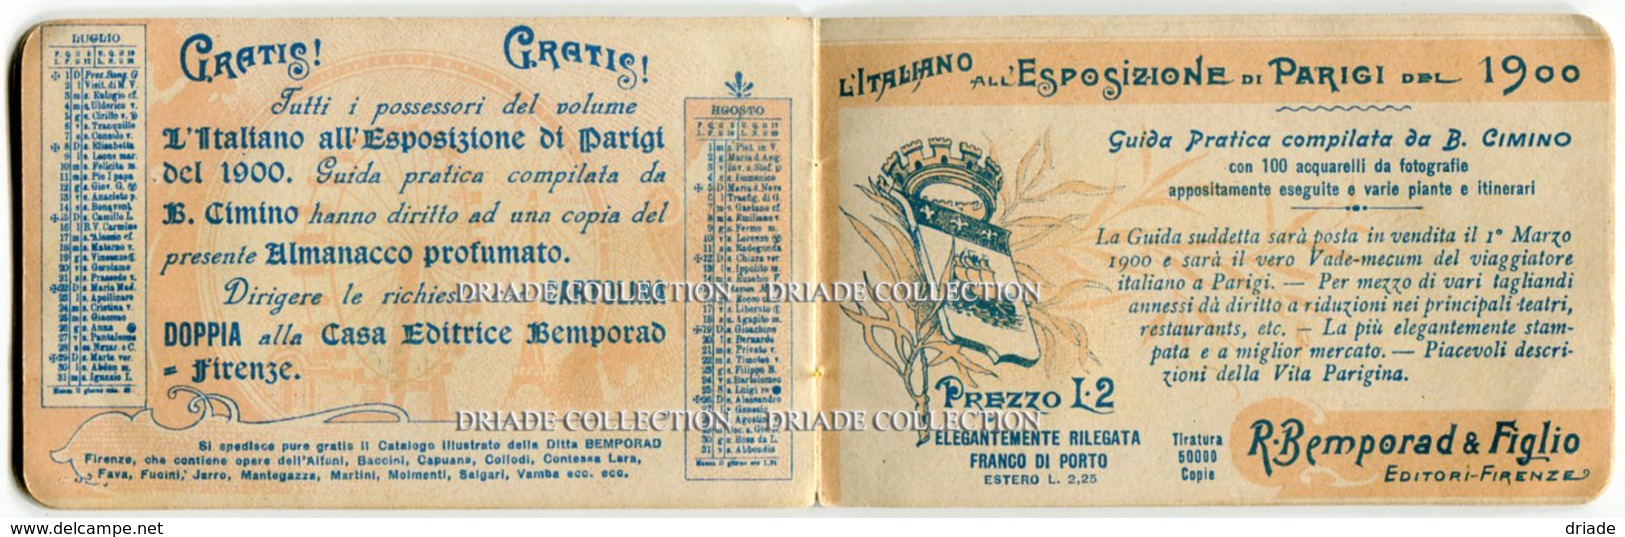 CALENDARIETTO ALMANACCO PROFUMATO CENERENTOLA EDITORE R. BEMPORAD ANNO 1900 CALENDRIER PARFUMEE WALT DISNEY